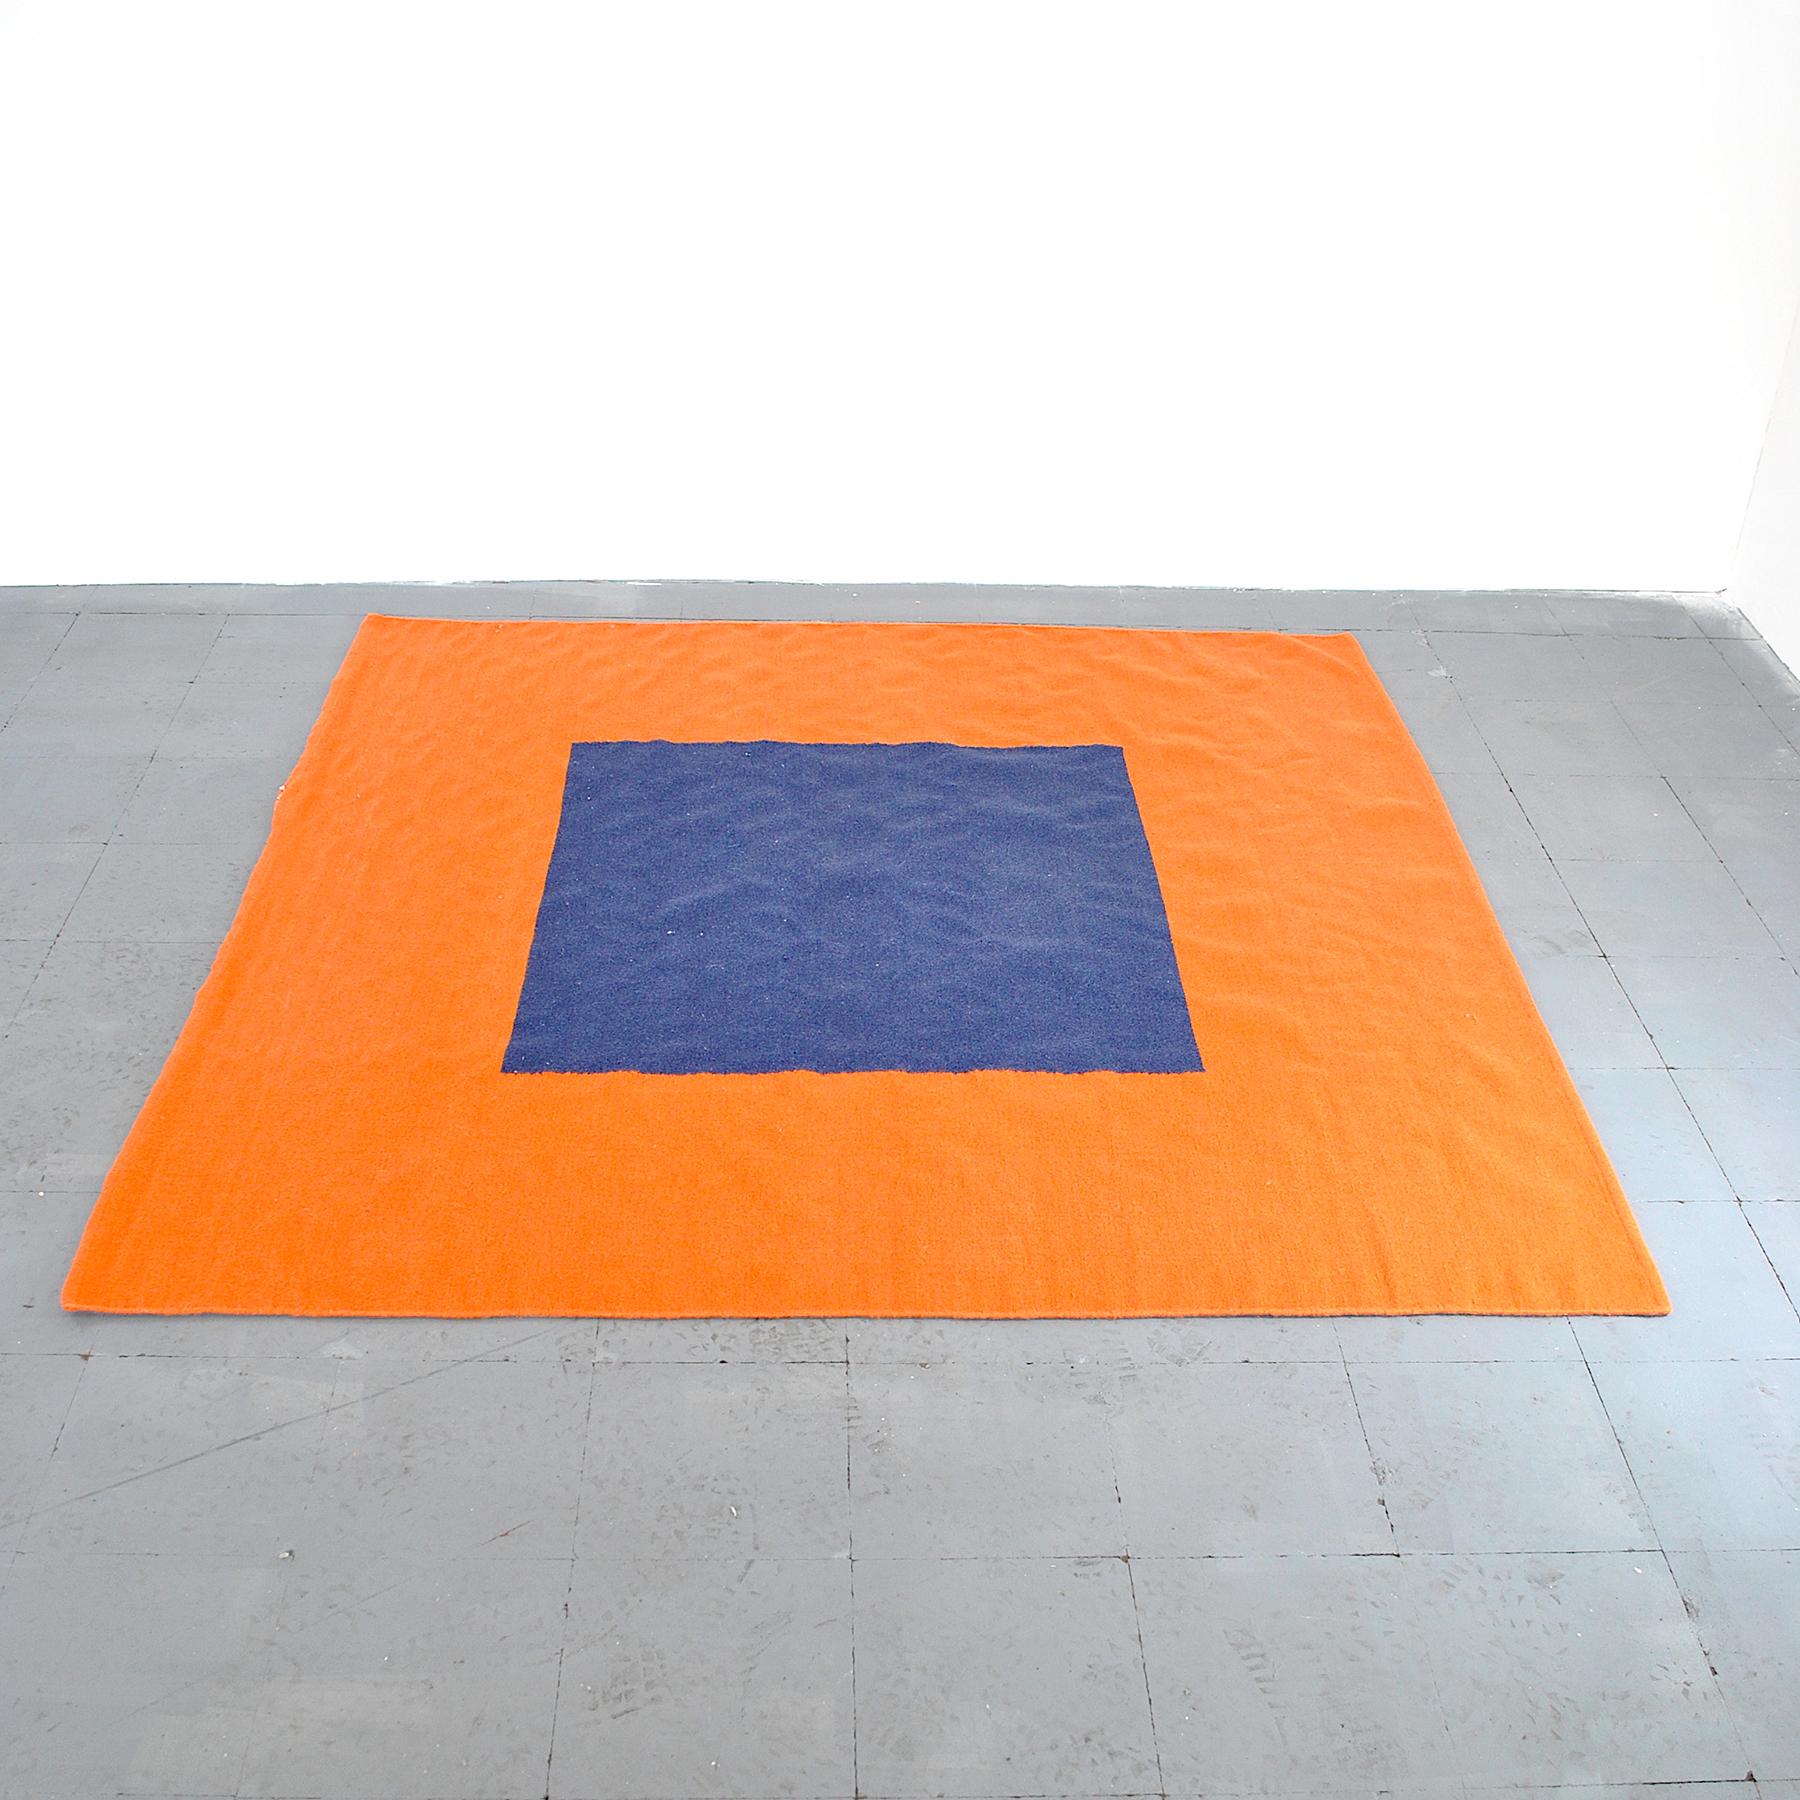 Wool carpet geometric design by Benetton, mid-1990s.